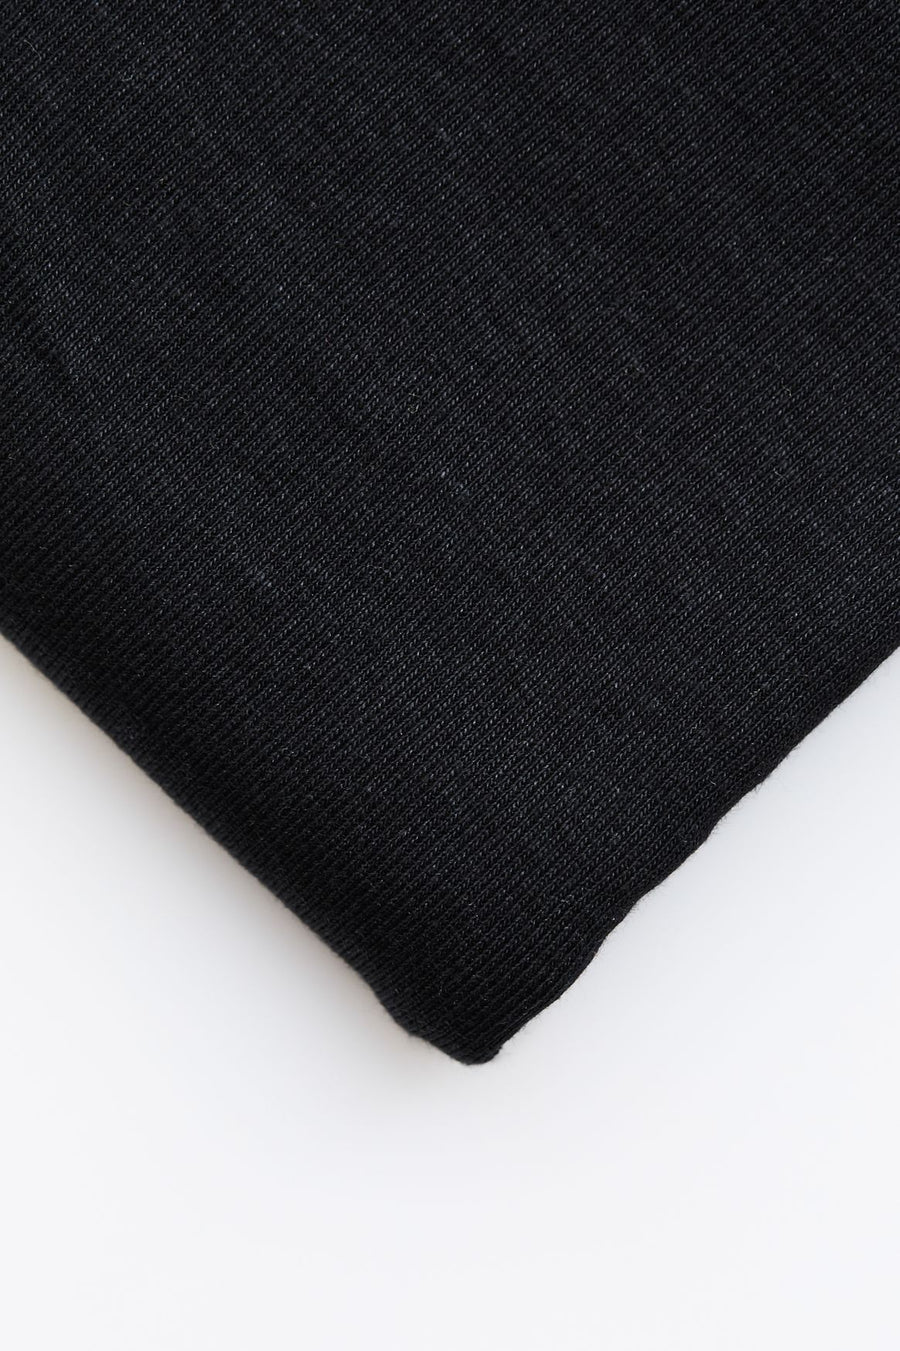 Fine Rib Jersey Fabric - Black